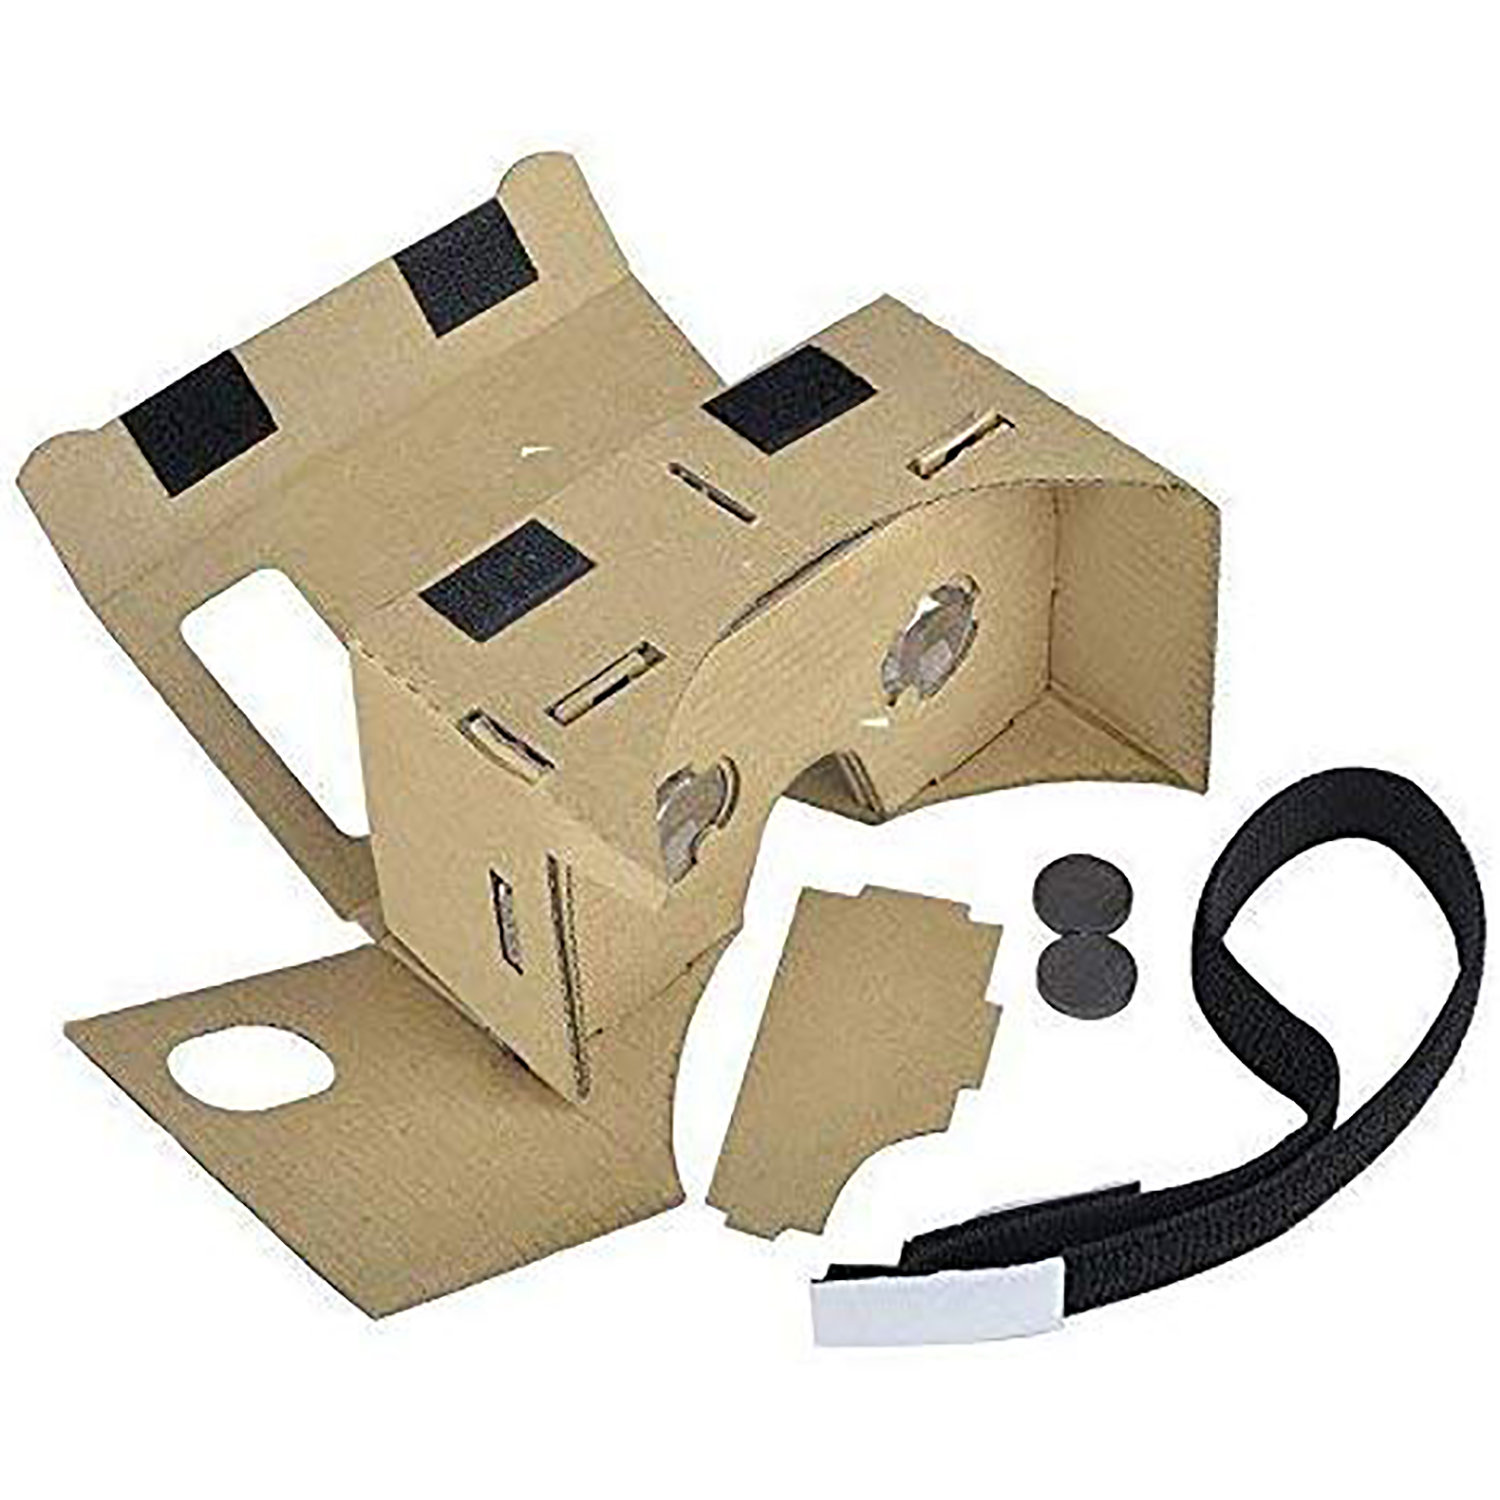 I AM Karton VR Karton Kopfhörer-Set V1